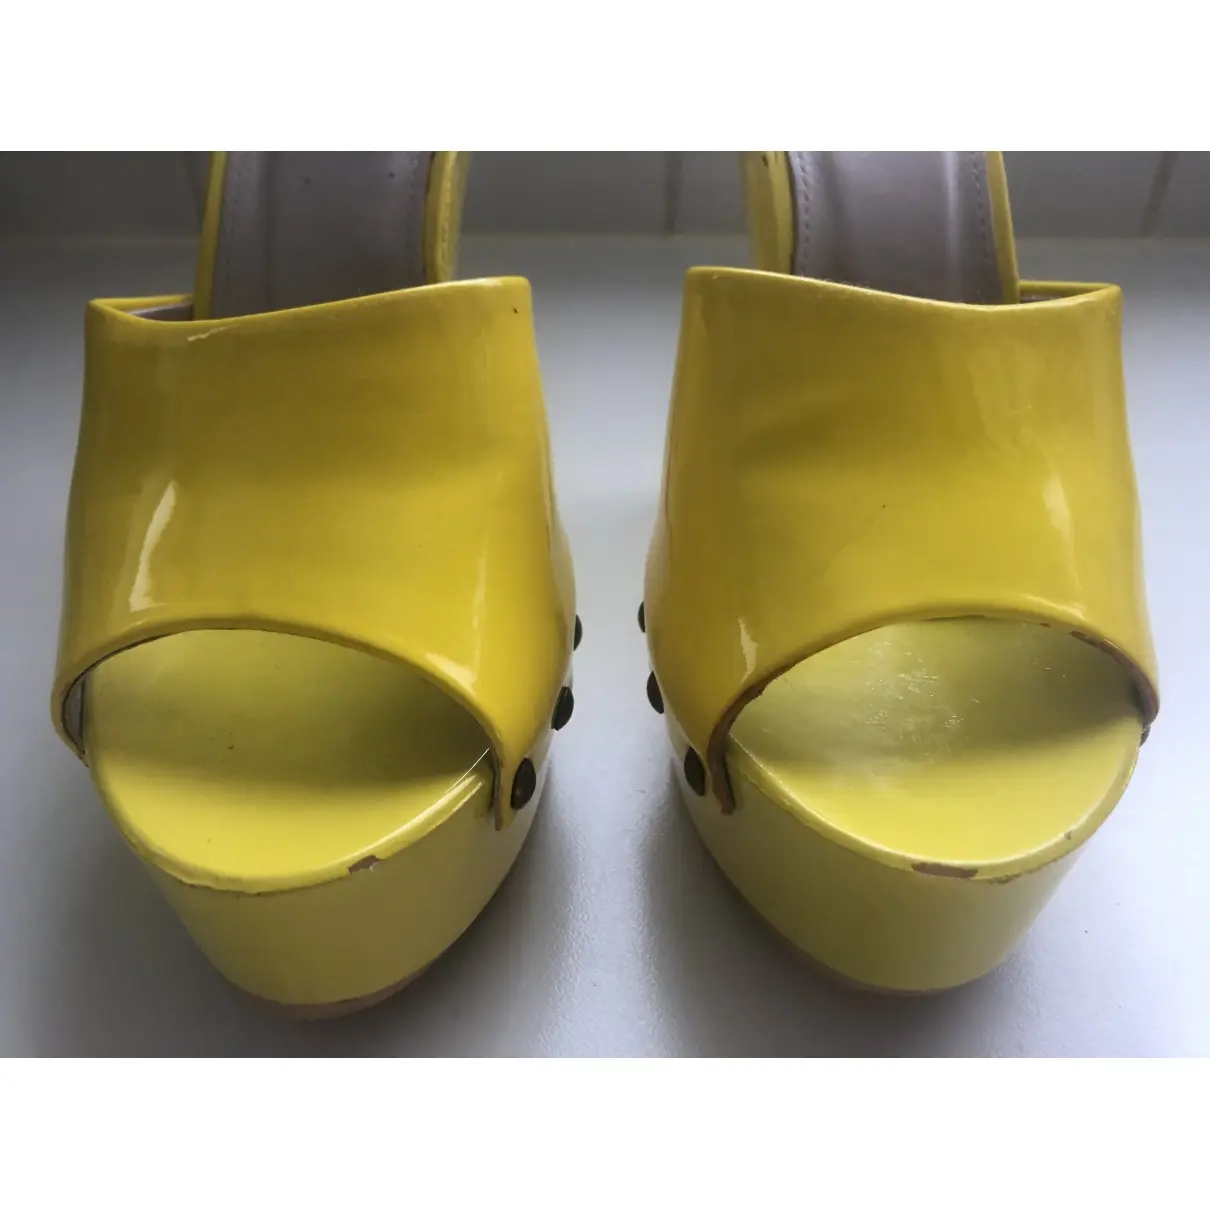 Yellow Plastic Sandals Versus